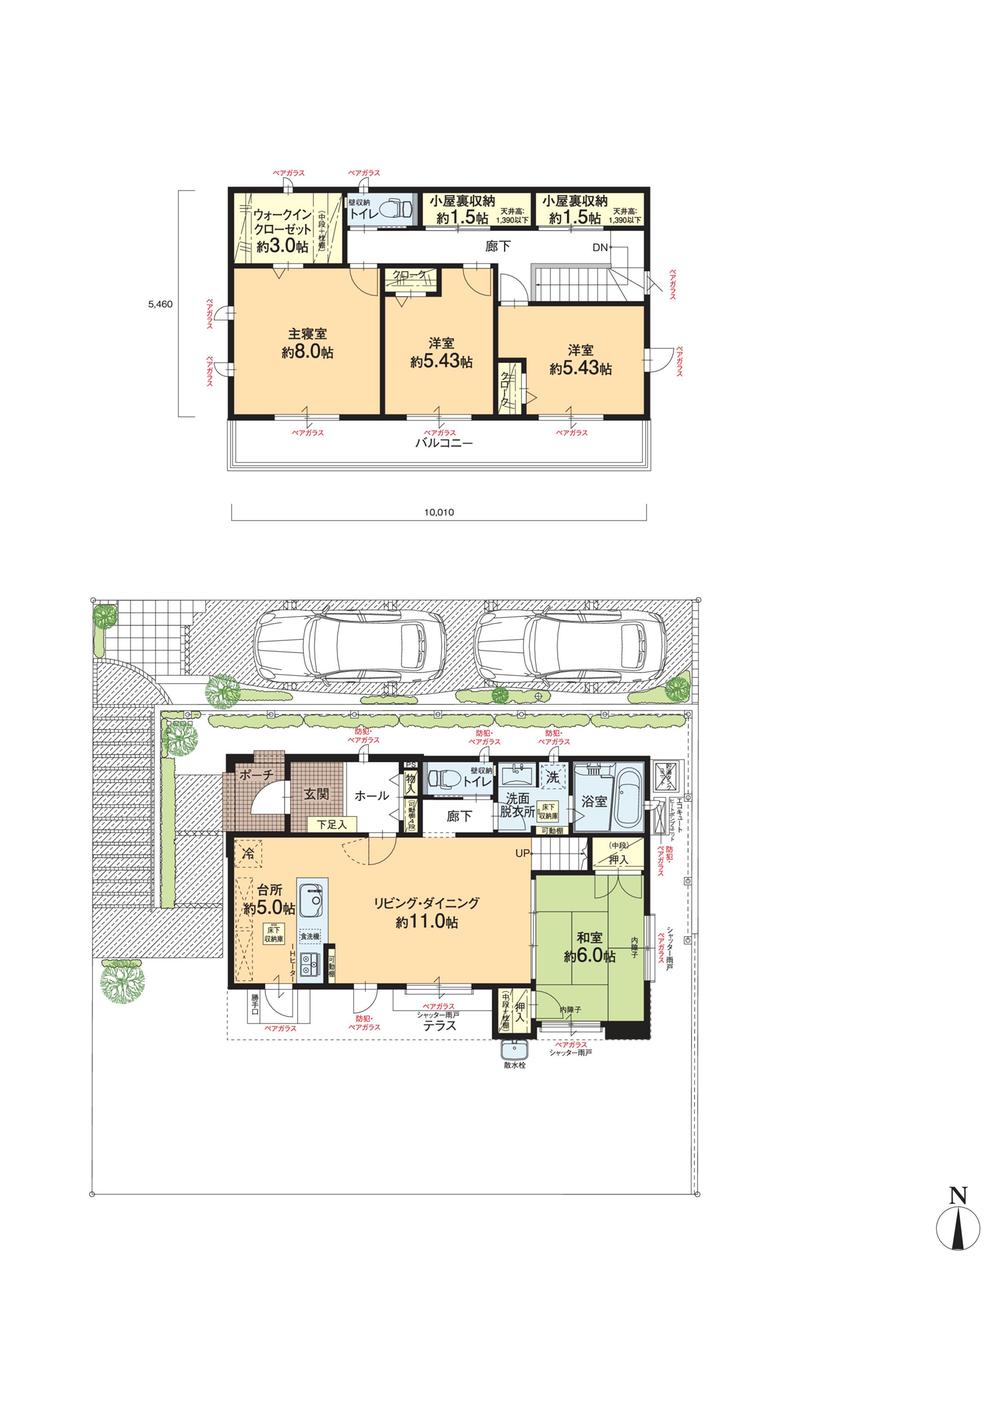 Floor plan. Tsukinoura to kindergarten 810m walk 11 minutes